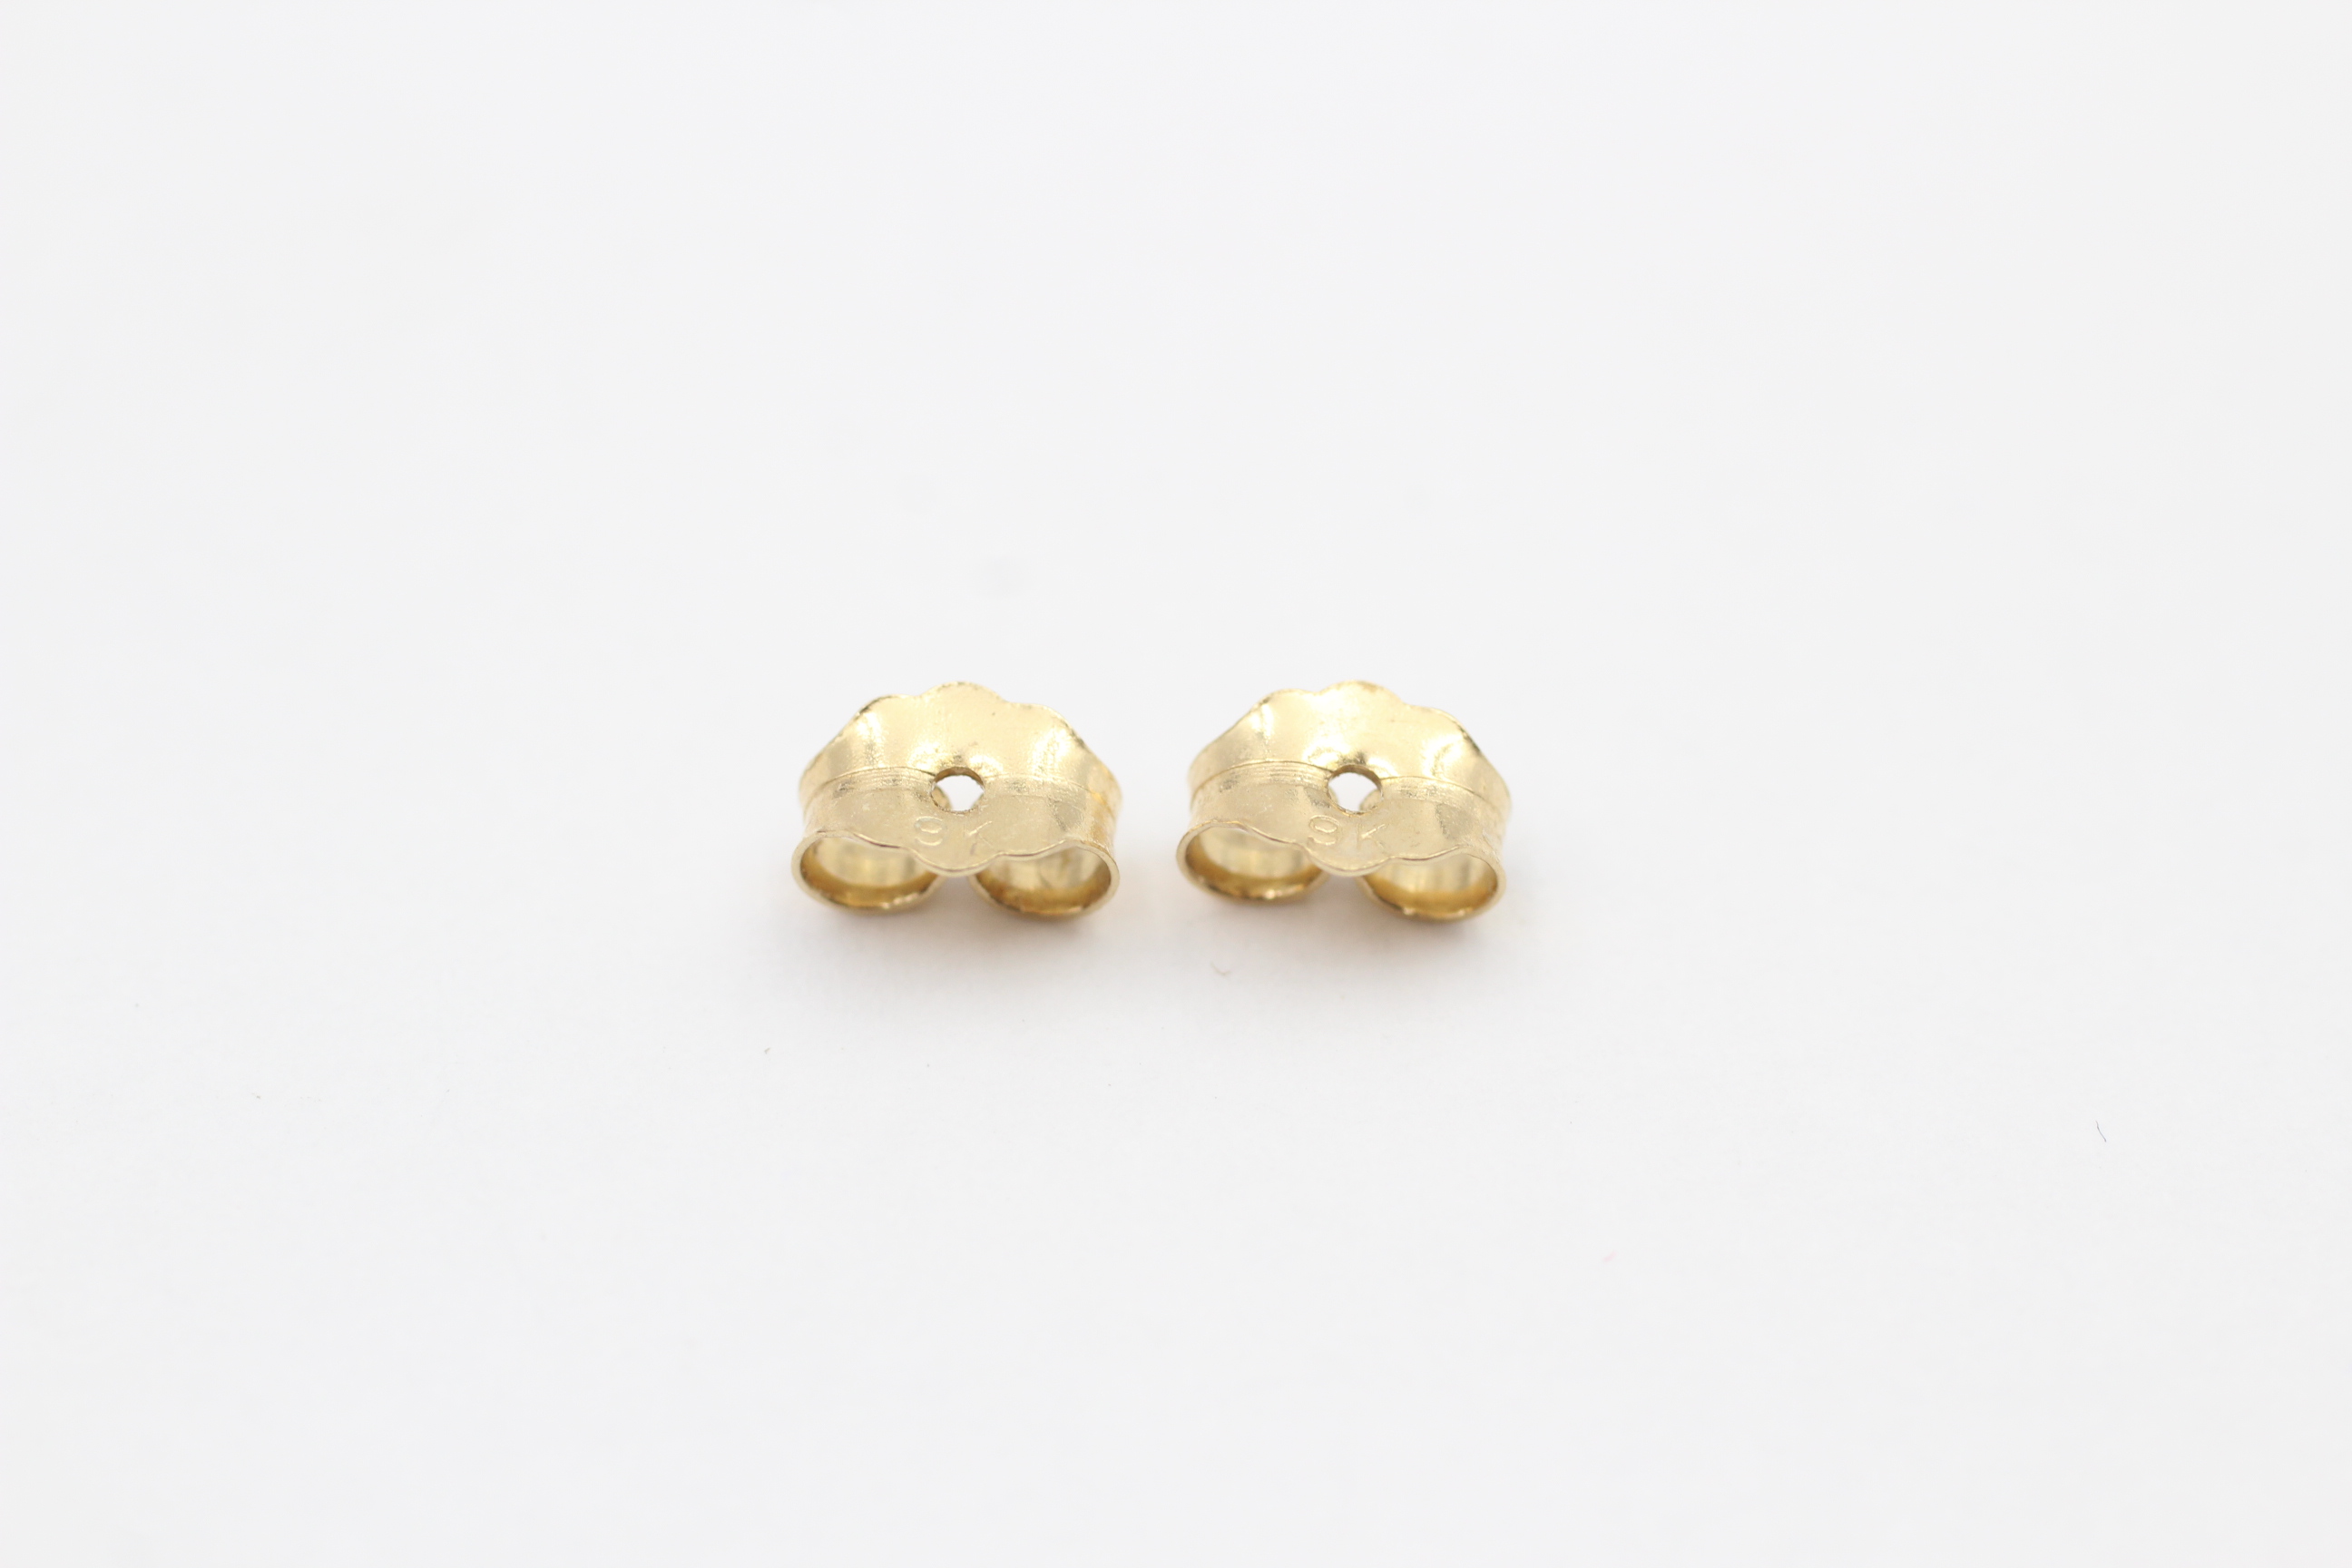 9ct Gold Diamond Set Heart Earrings - Image 4 of 4